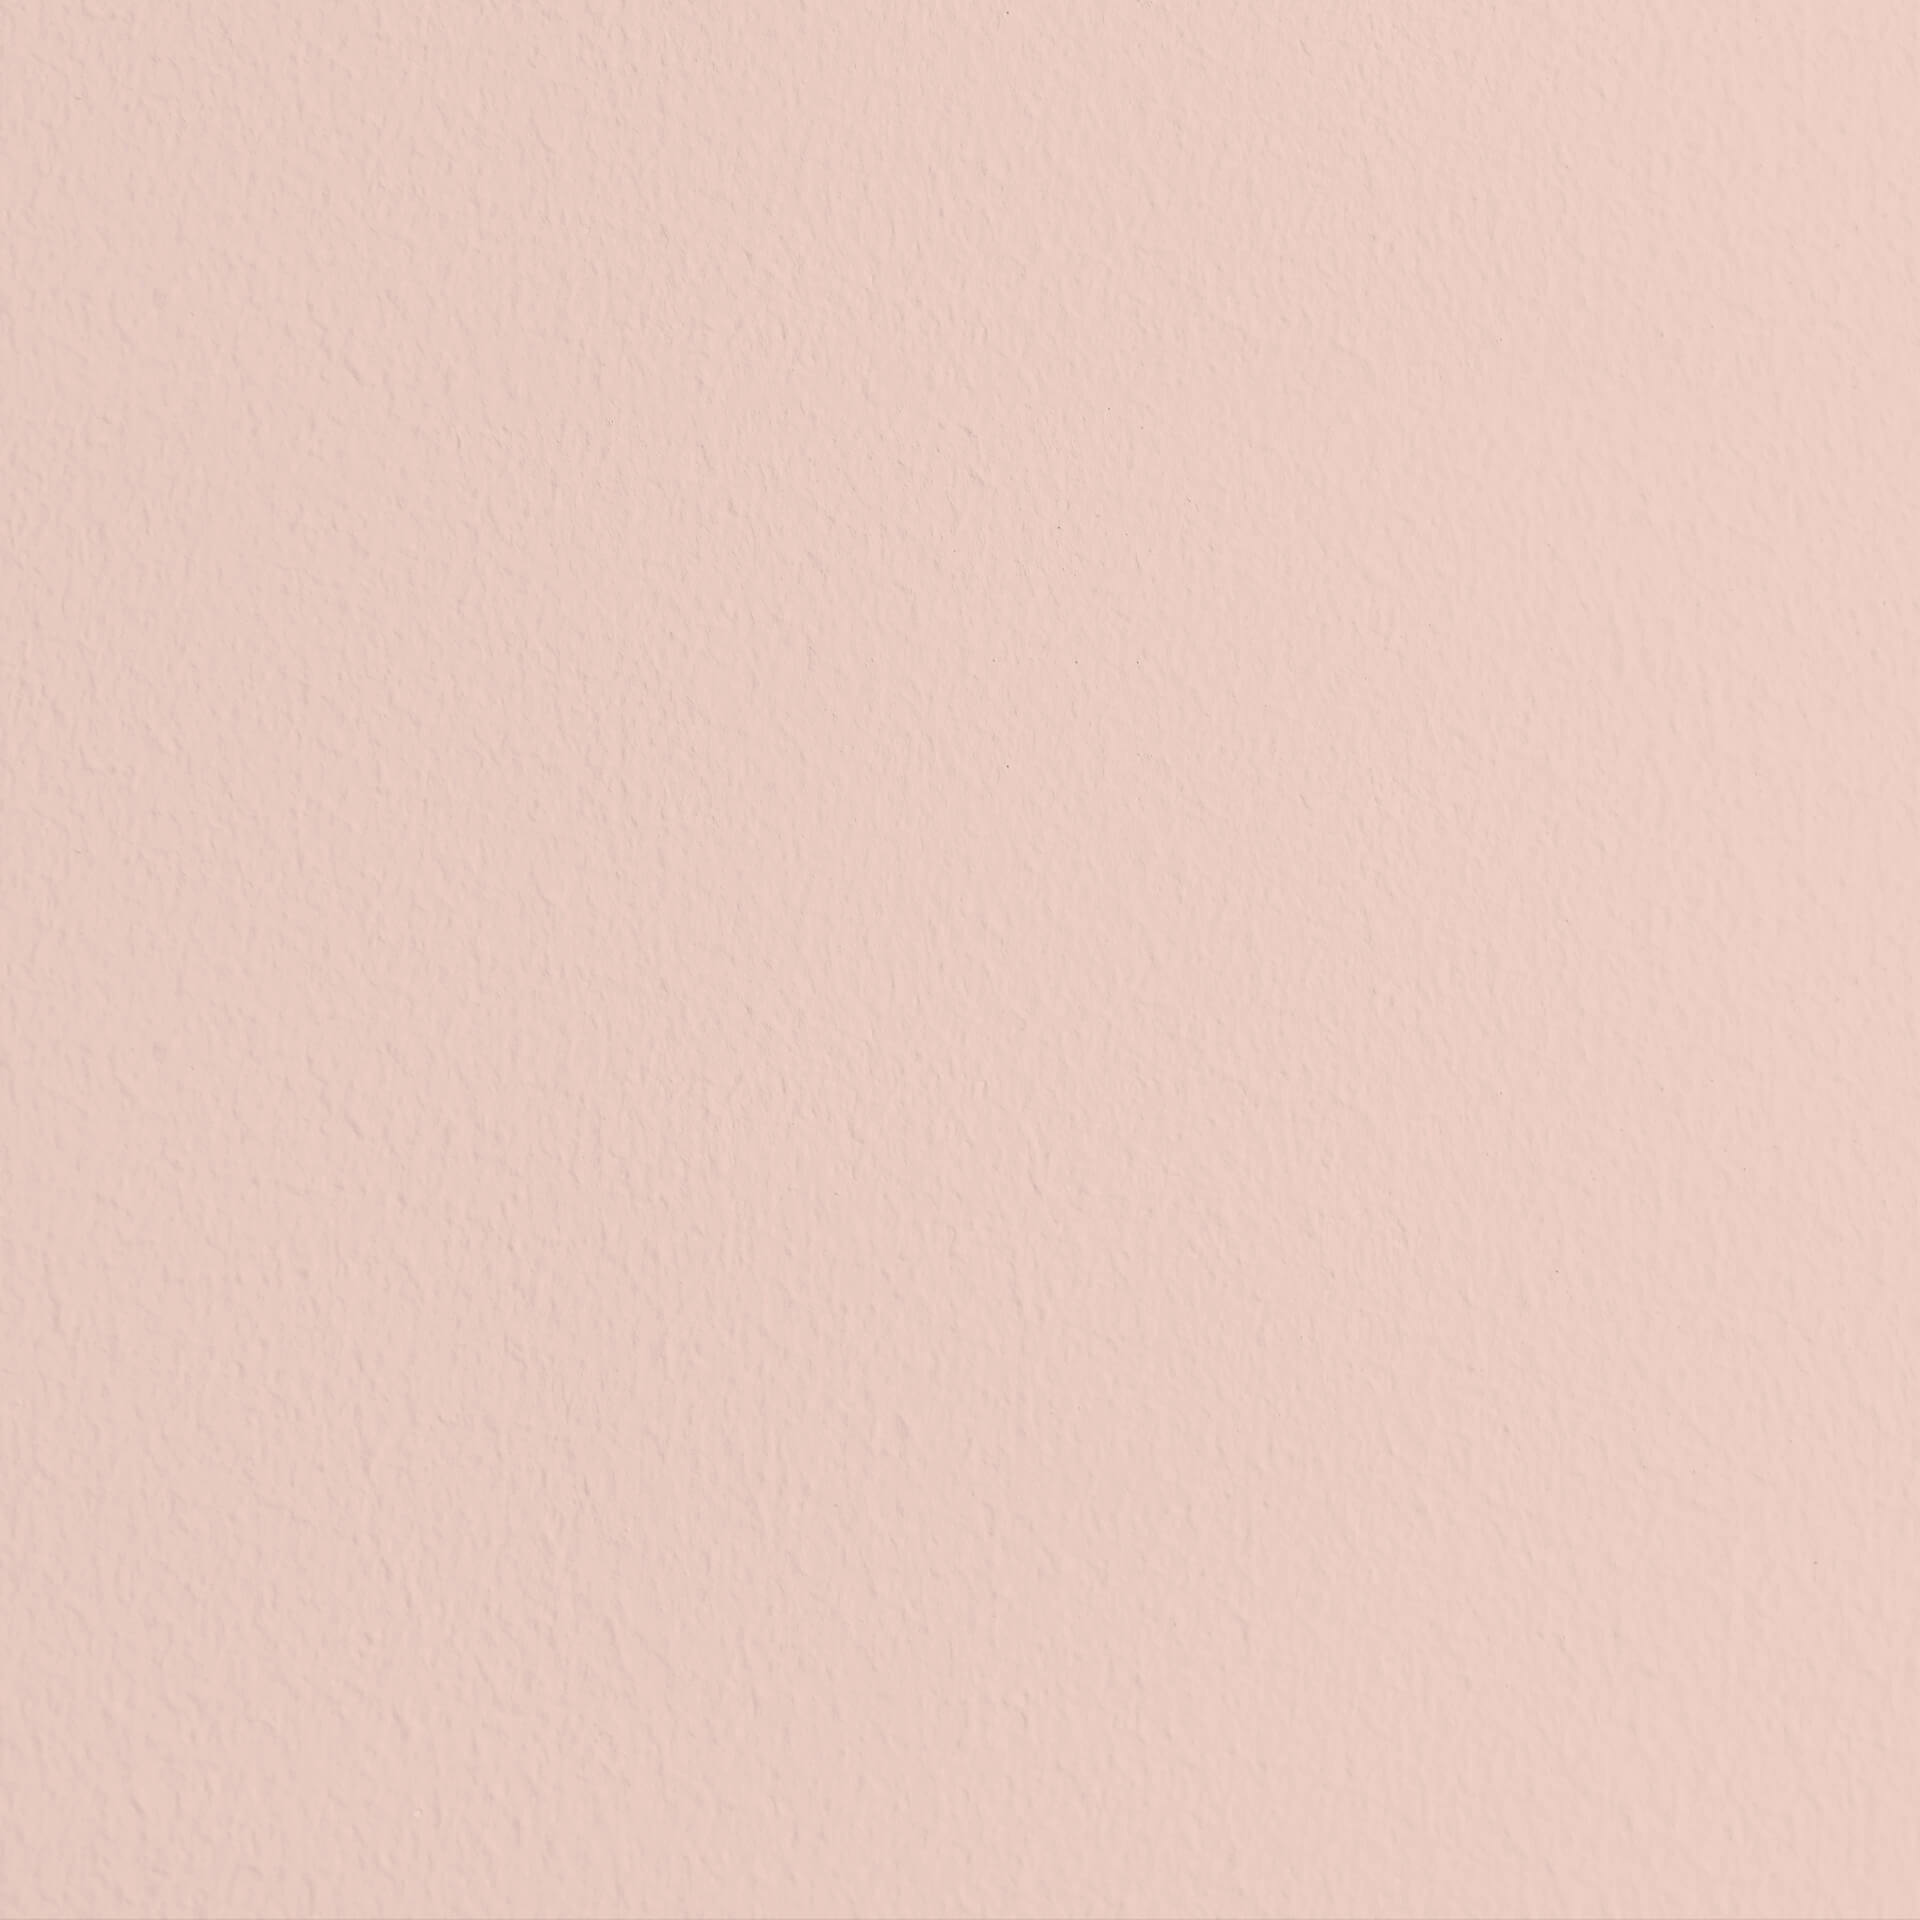 Mylands Gentleman's Pink No. 221 - Marble Matt Emulsion / Wandfarbe, 5L